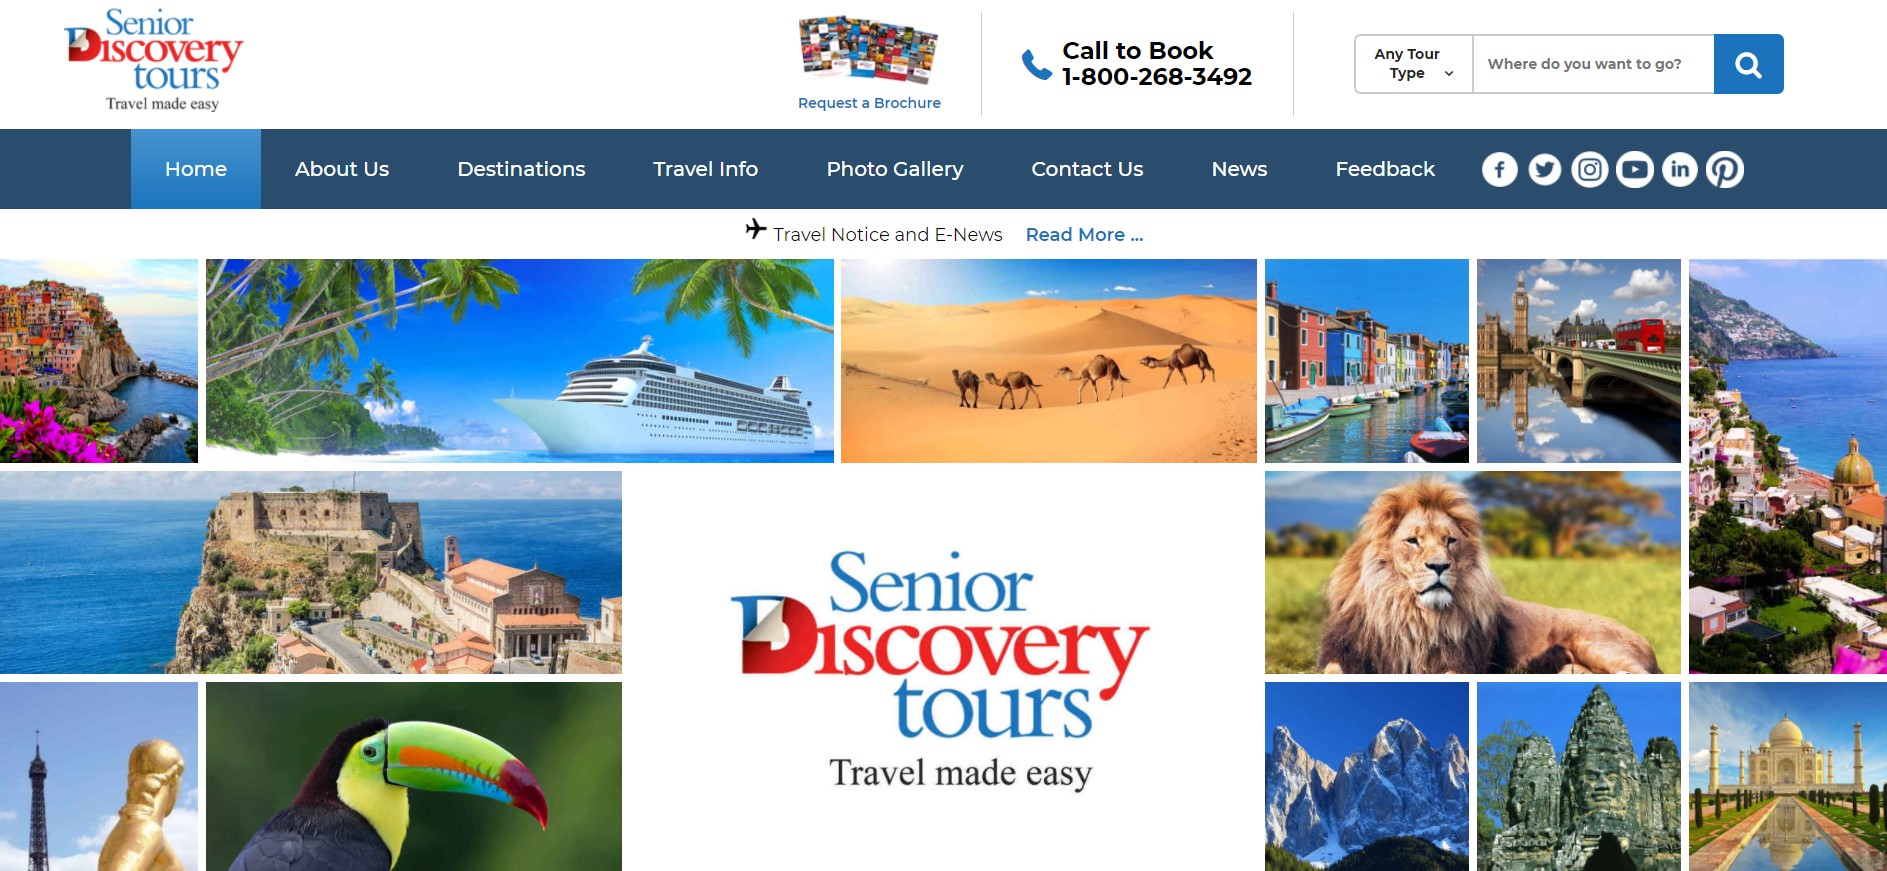 senior discovery tours travel agency in hamilton